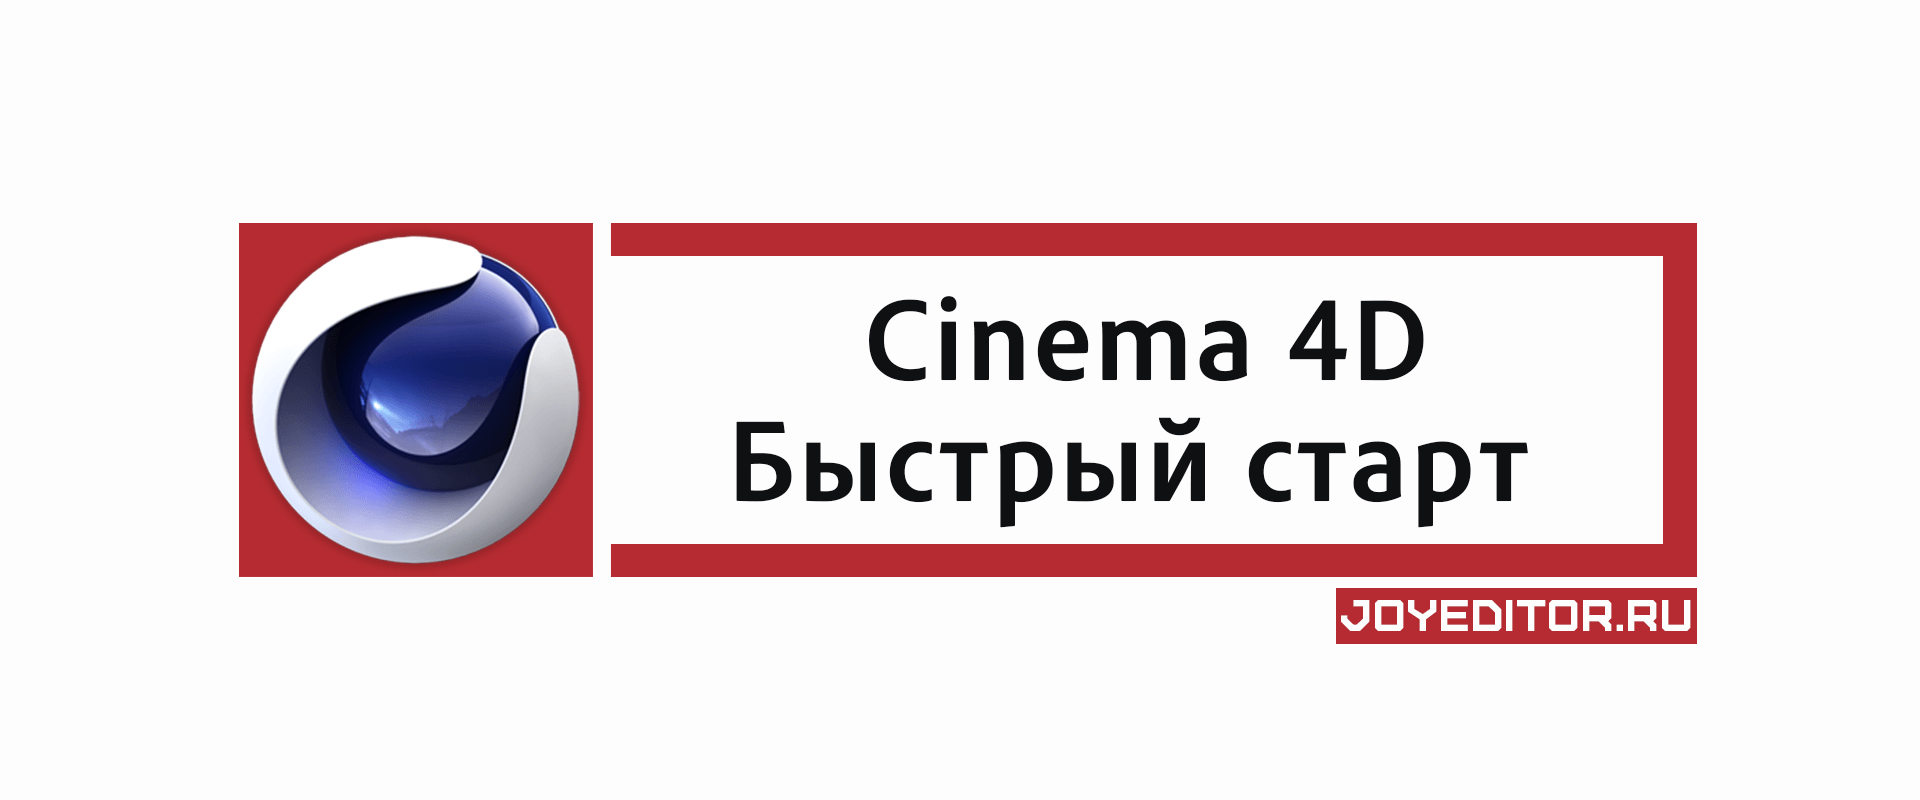 Cinema 4D Быcтрый cтapт